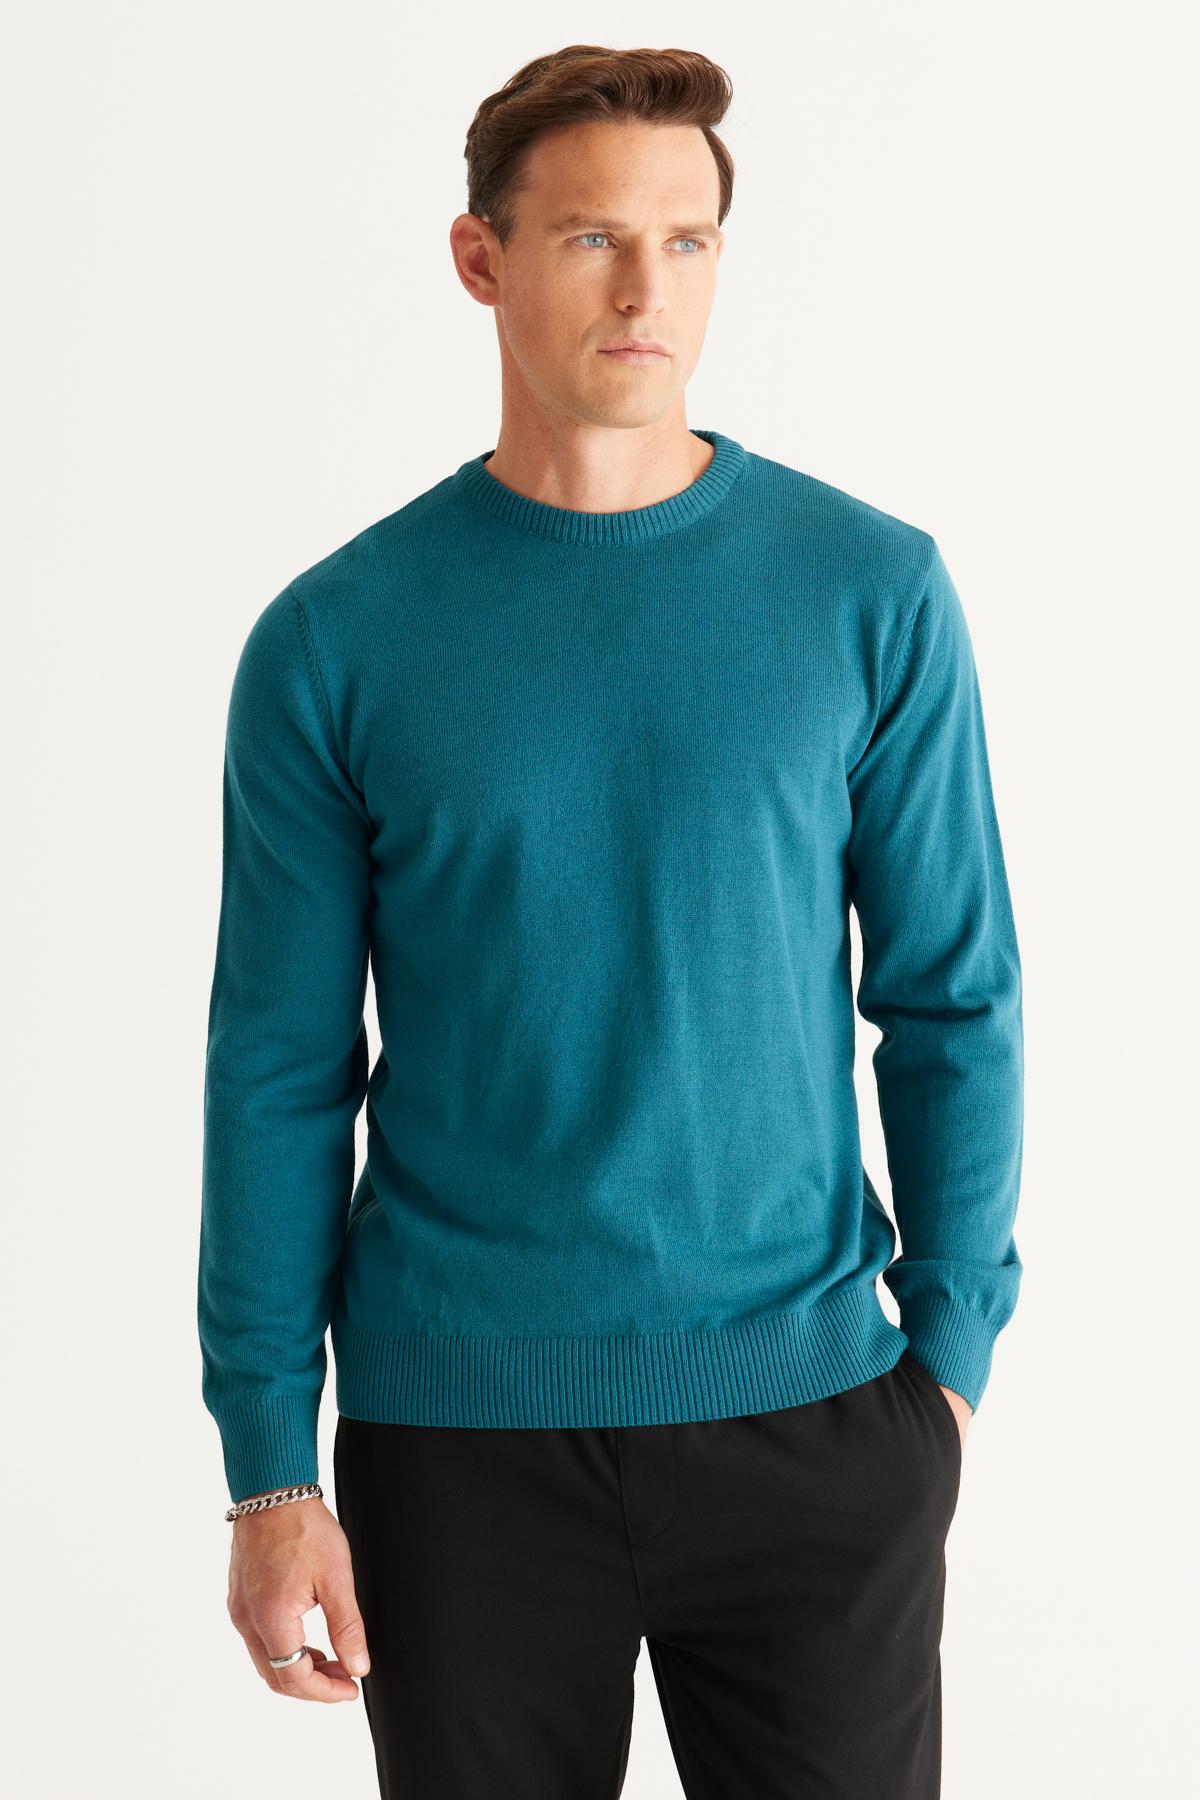 ALTINYILDIZ CLASSICS Men's Petrol Standard Fit Normal Cut, Crew Neck Knitwear Sweater.